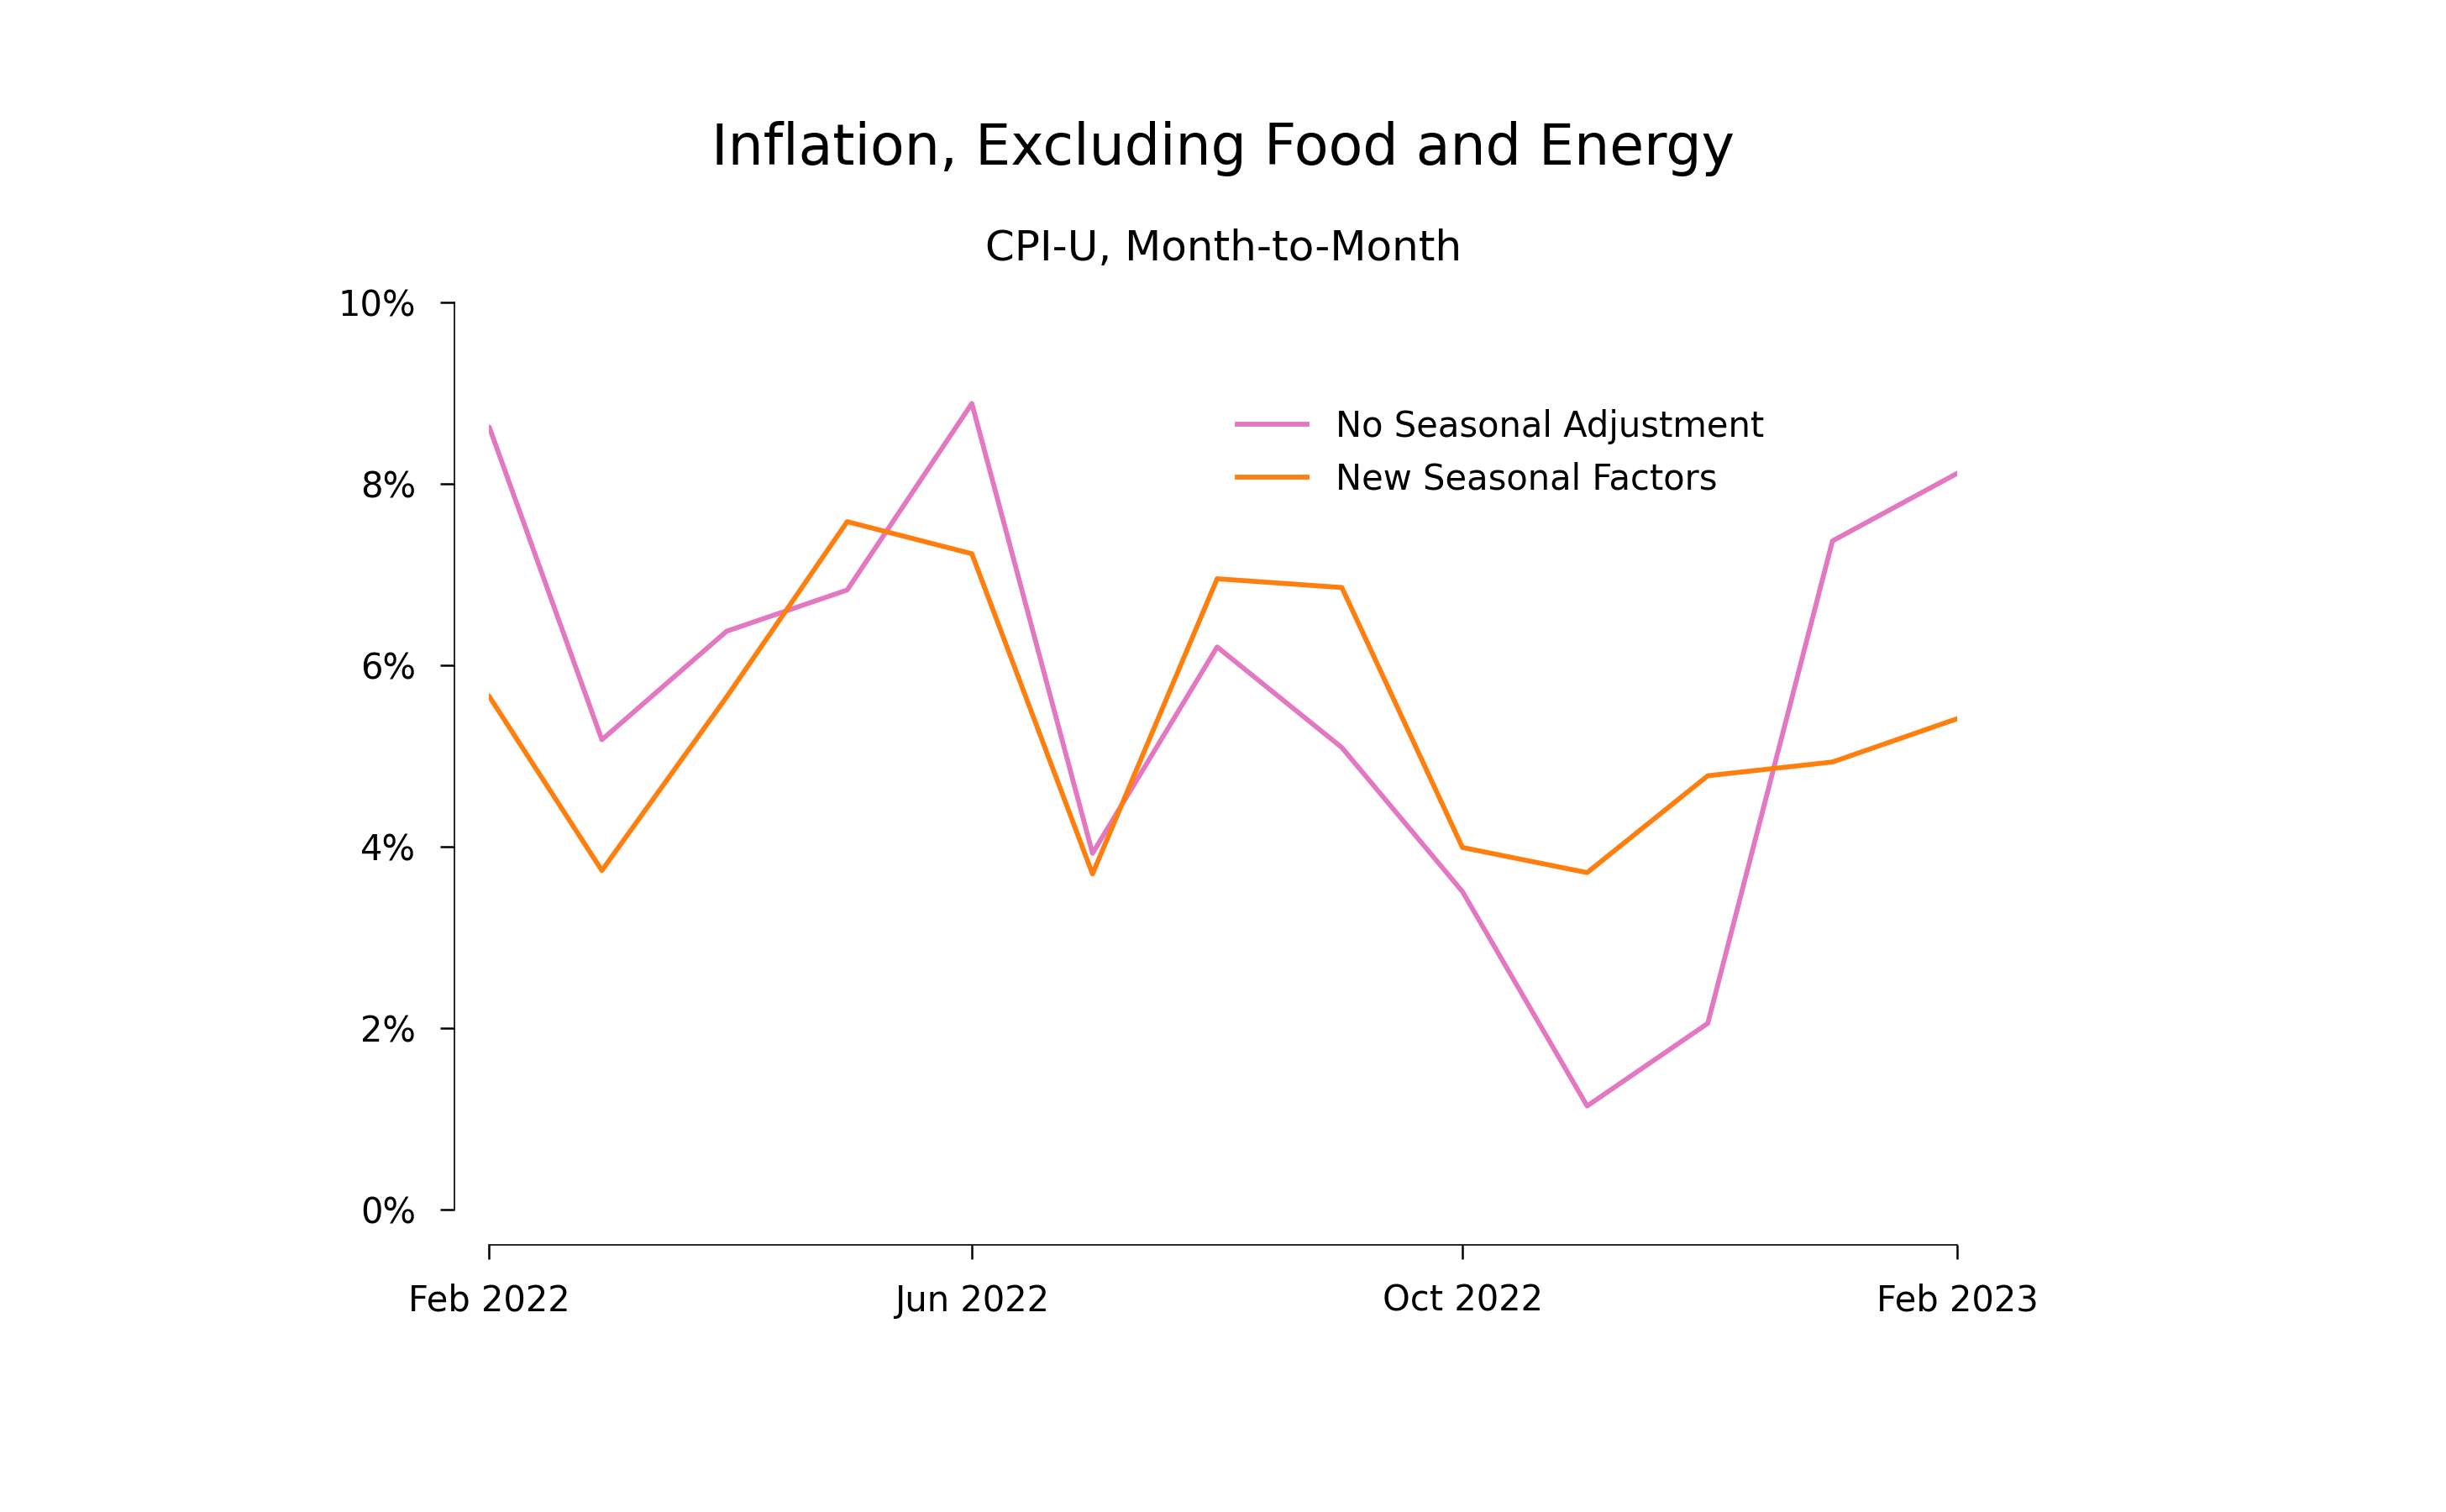 Seasonally Adjusted and Not Seasonally Adjusted Inflation, last 12 months